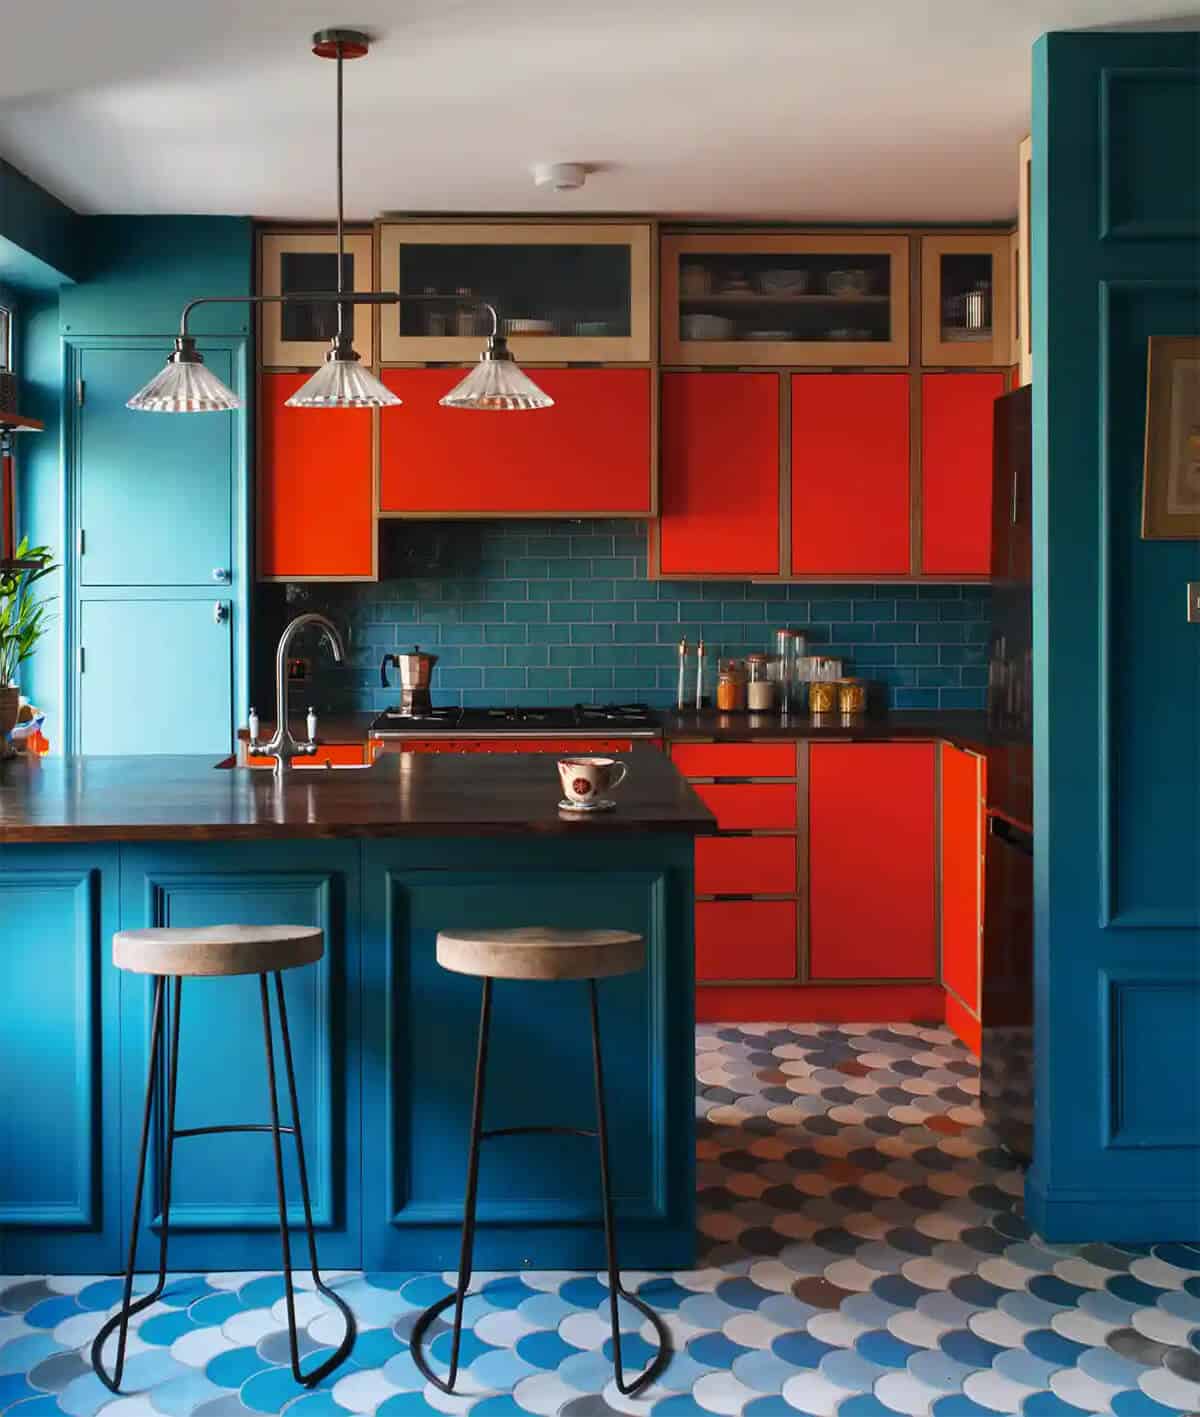 red and blue kitchen design with patterned cabaret floor tiles